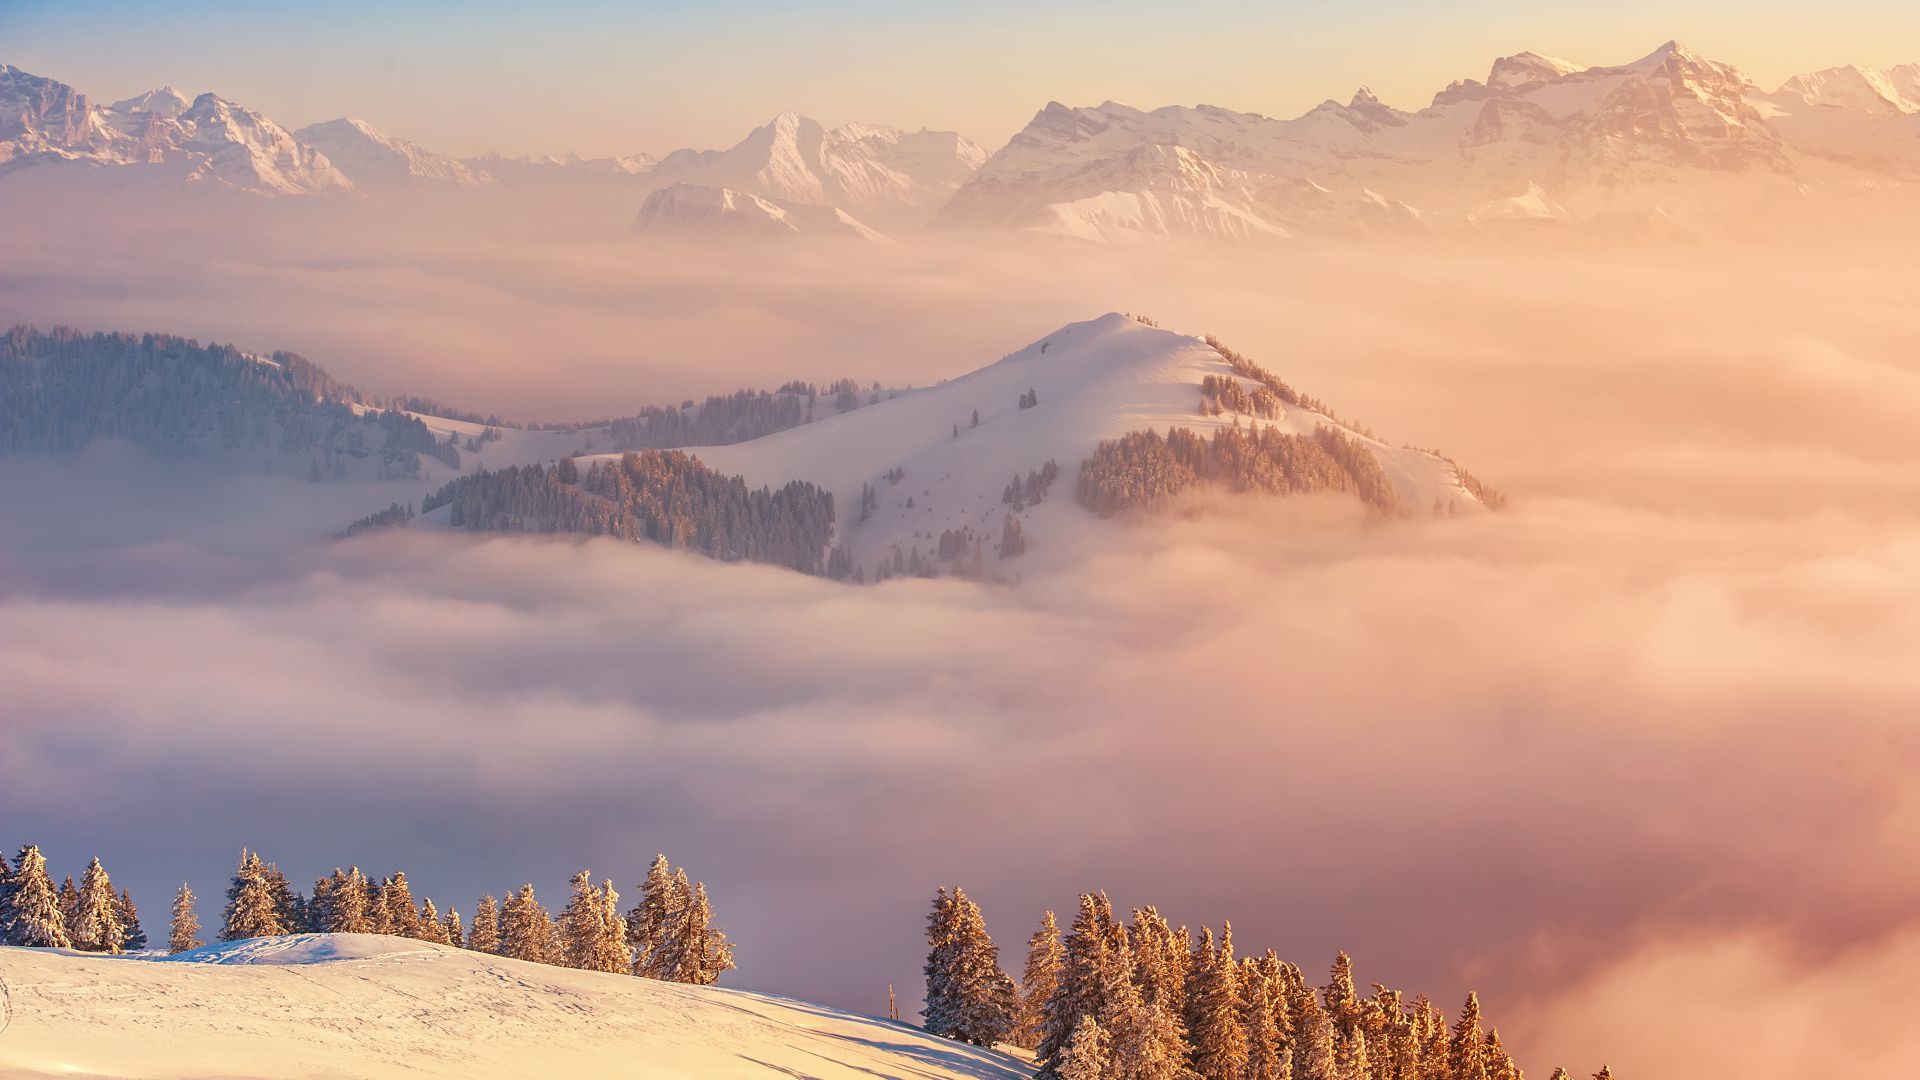 Alps, 5k, 4k wallpaper, Switzerland, mountains, clouds, pines (horizontal)